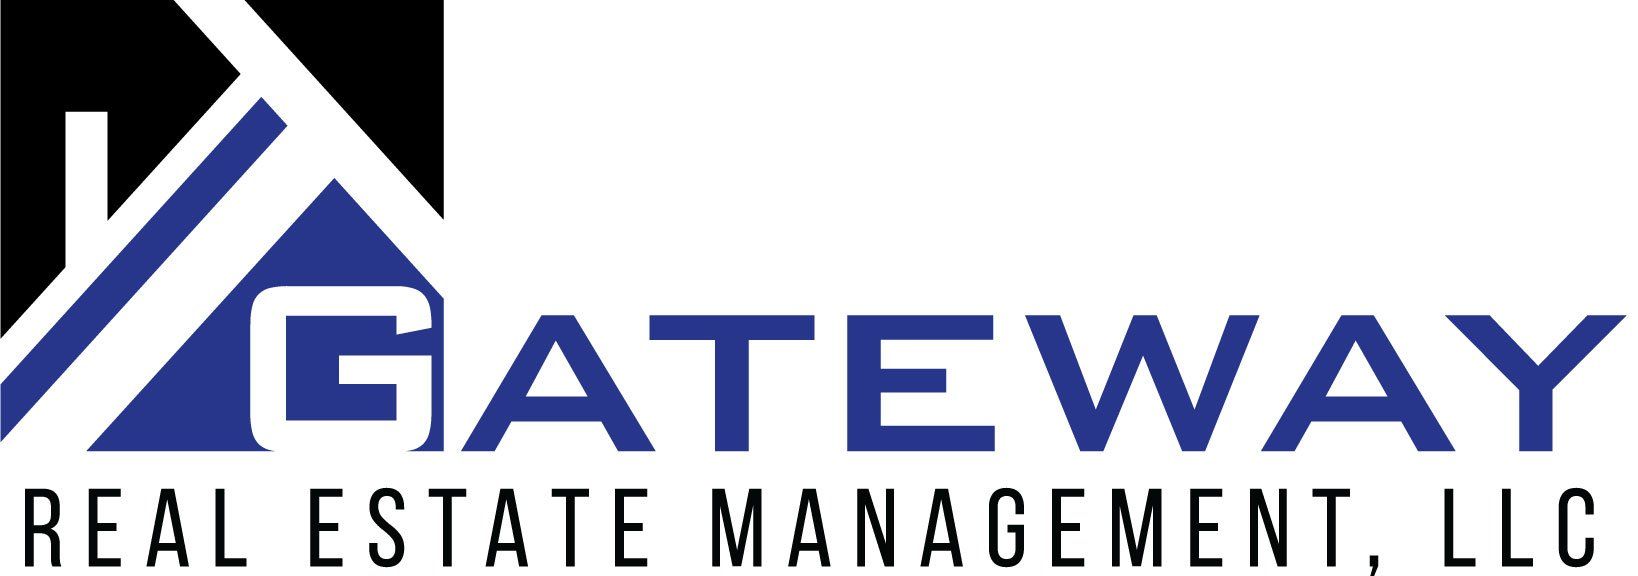 Gateway Real Estate Management